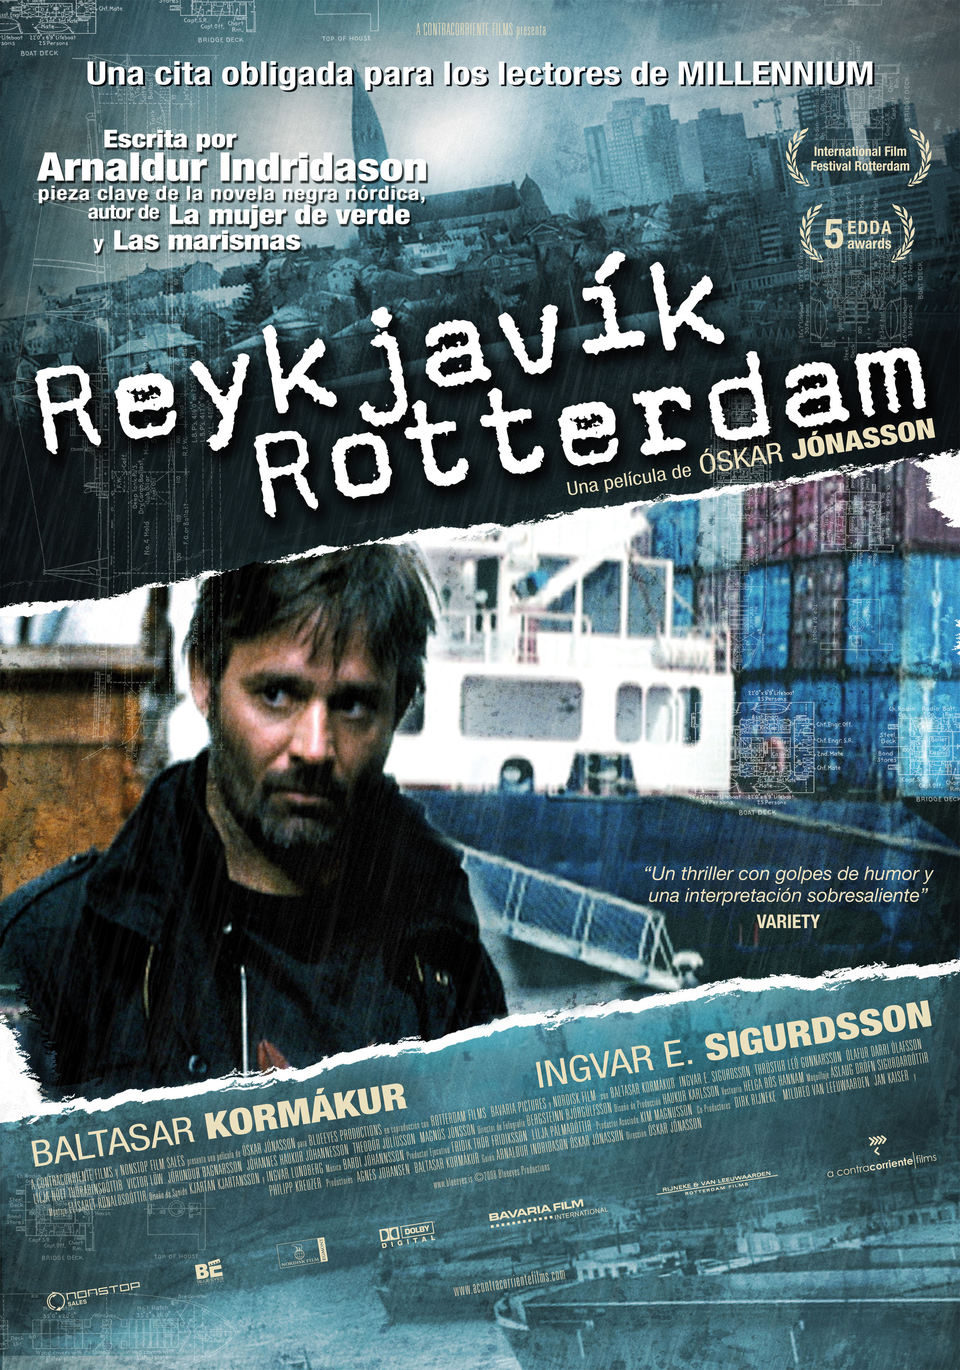 Cartel de Reykjavik-Rotterdam - España